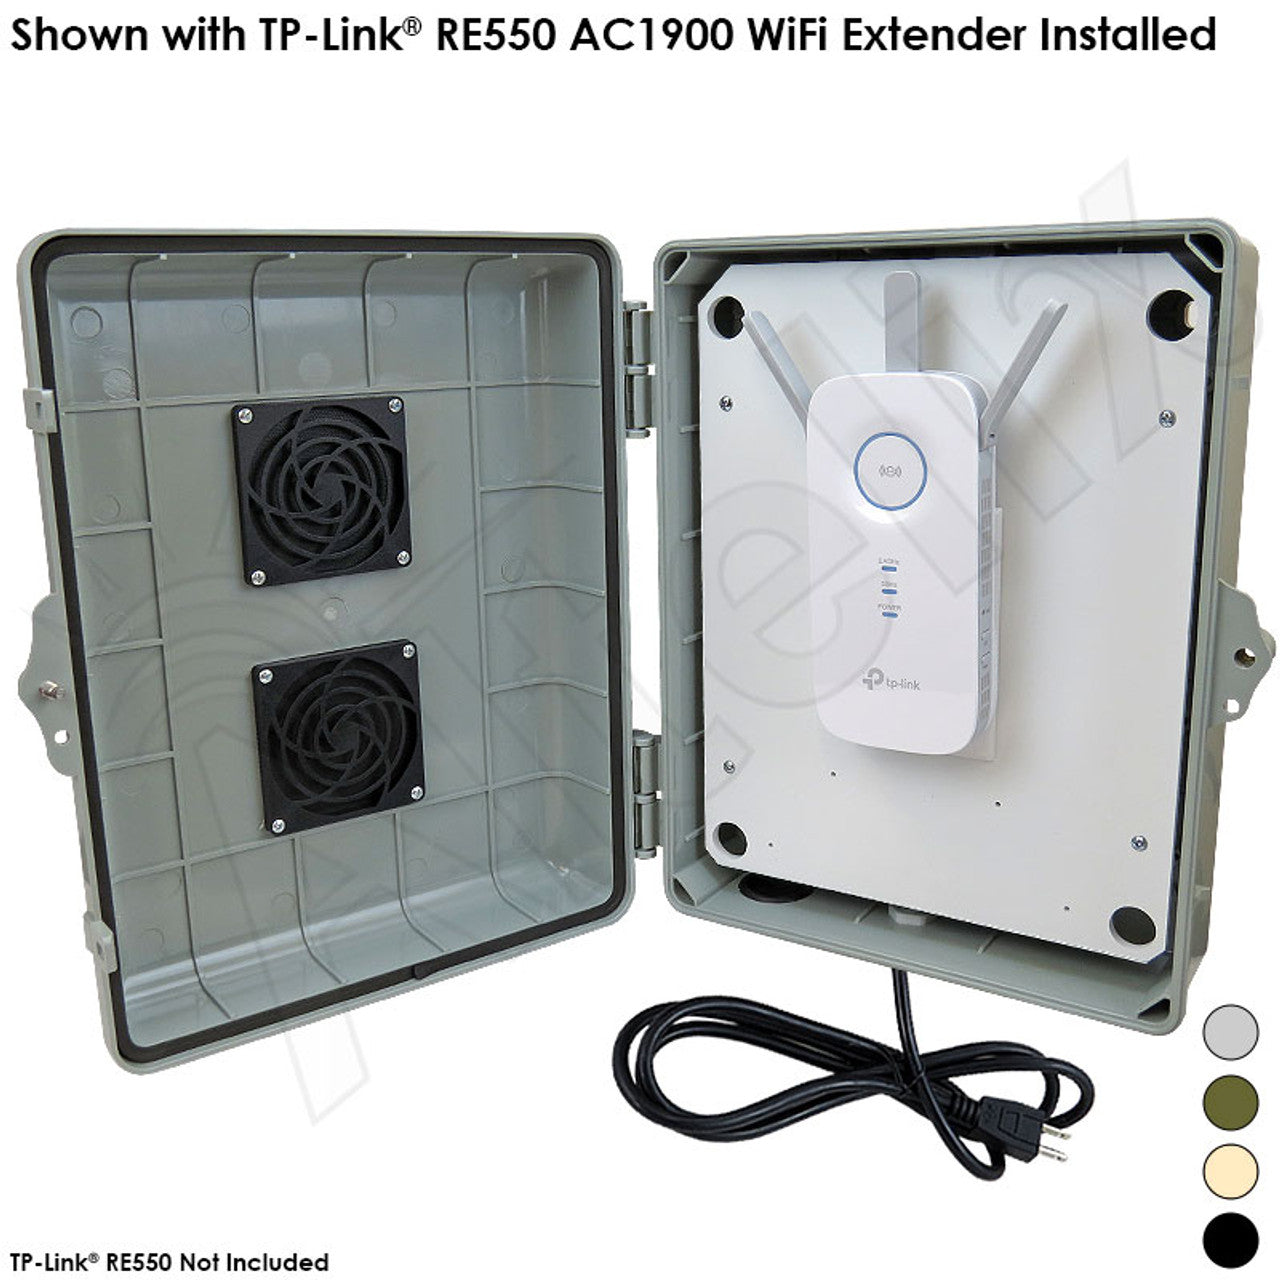 Altelix Weatherproof Vented WiFi Enclosure for TP-Link® RE550 AC1900 WiFi Extender-1